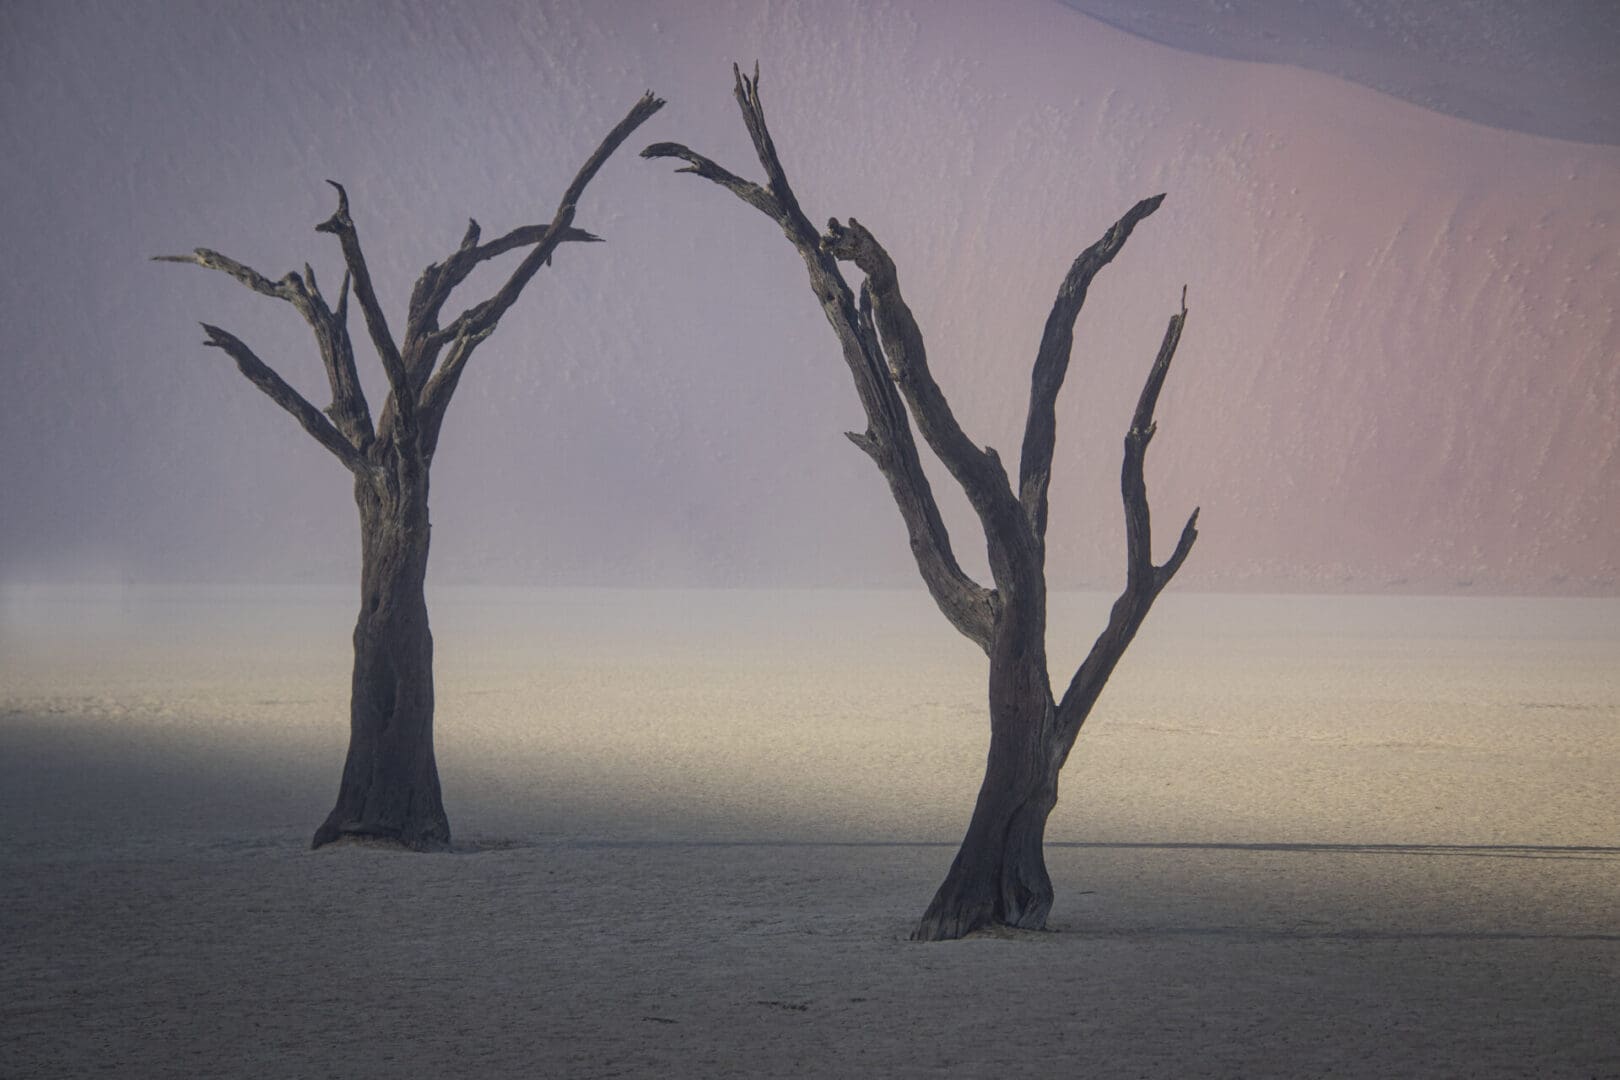 Two dead trees in the desert.